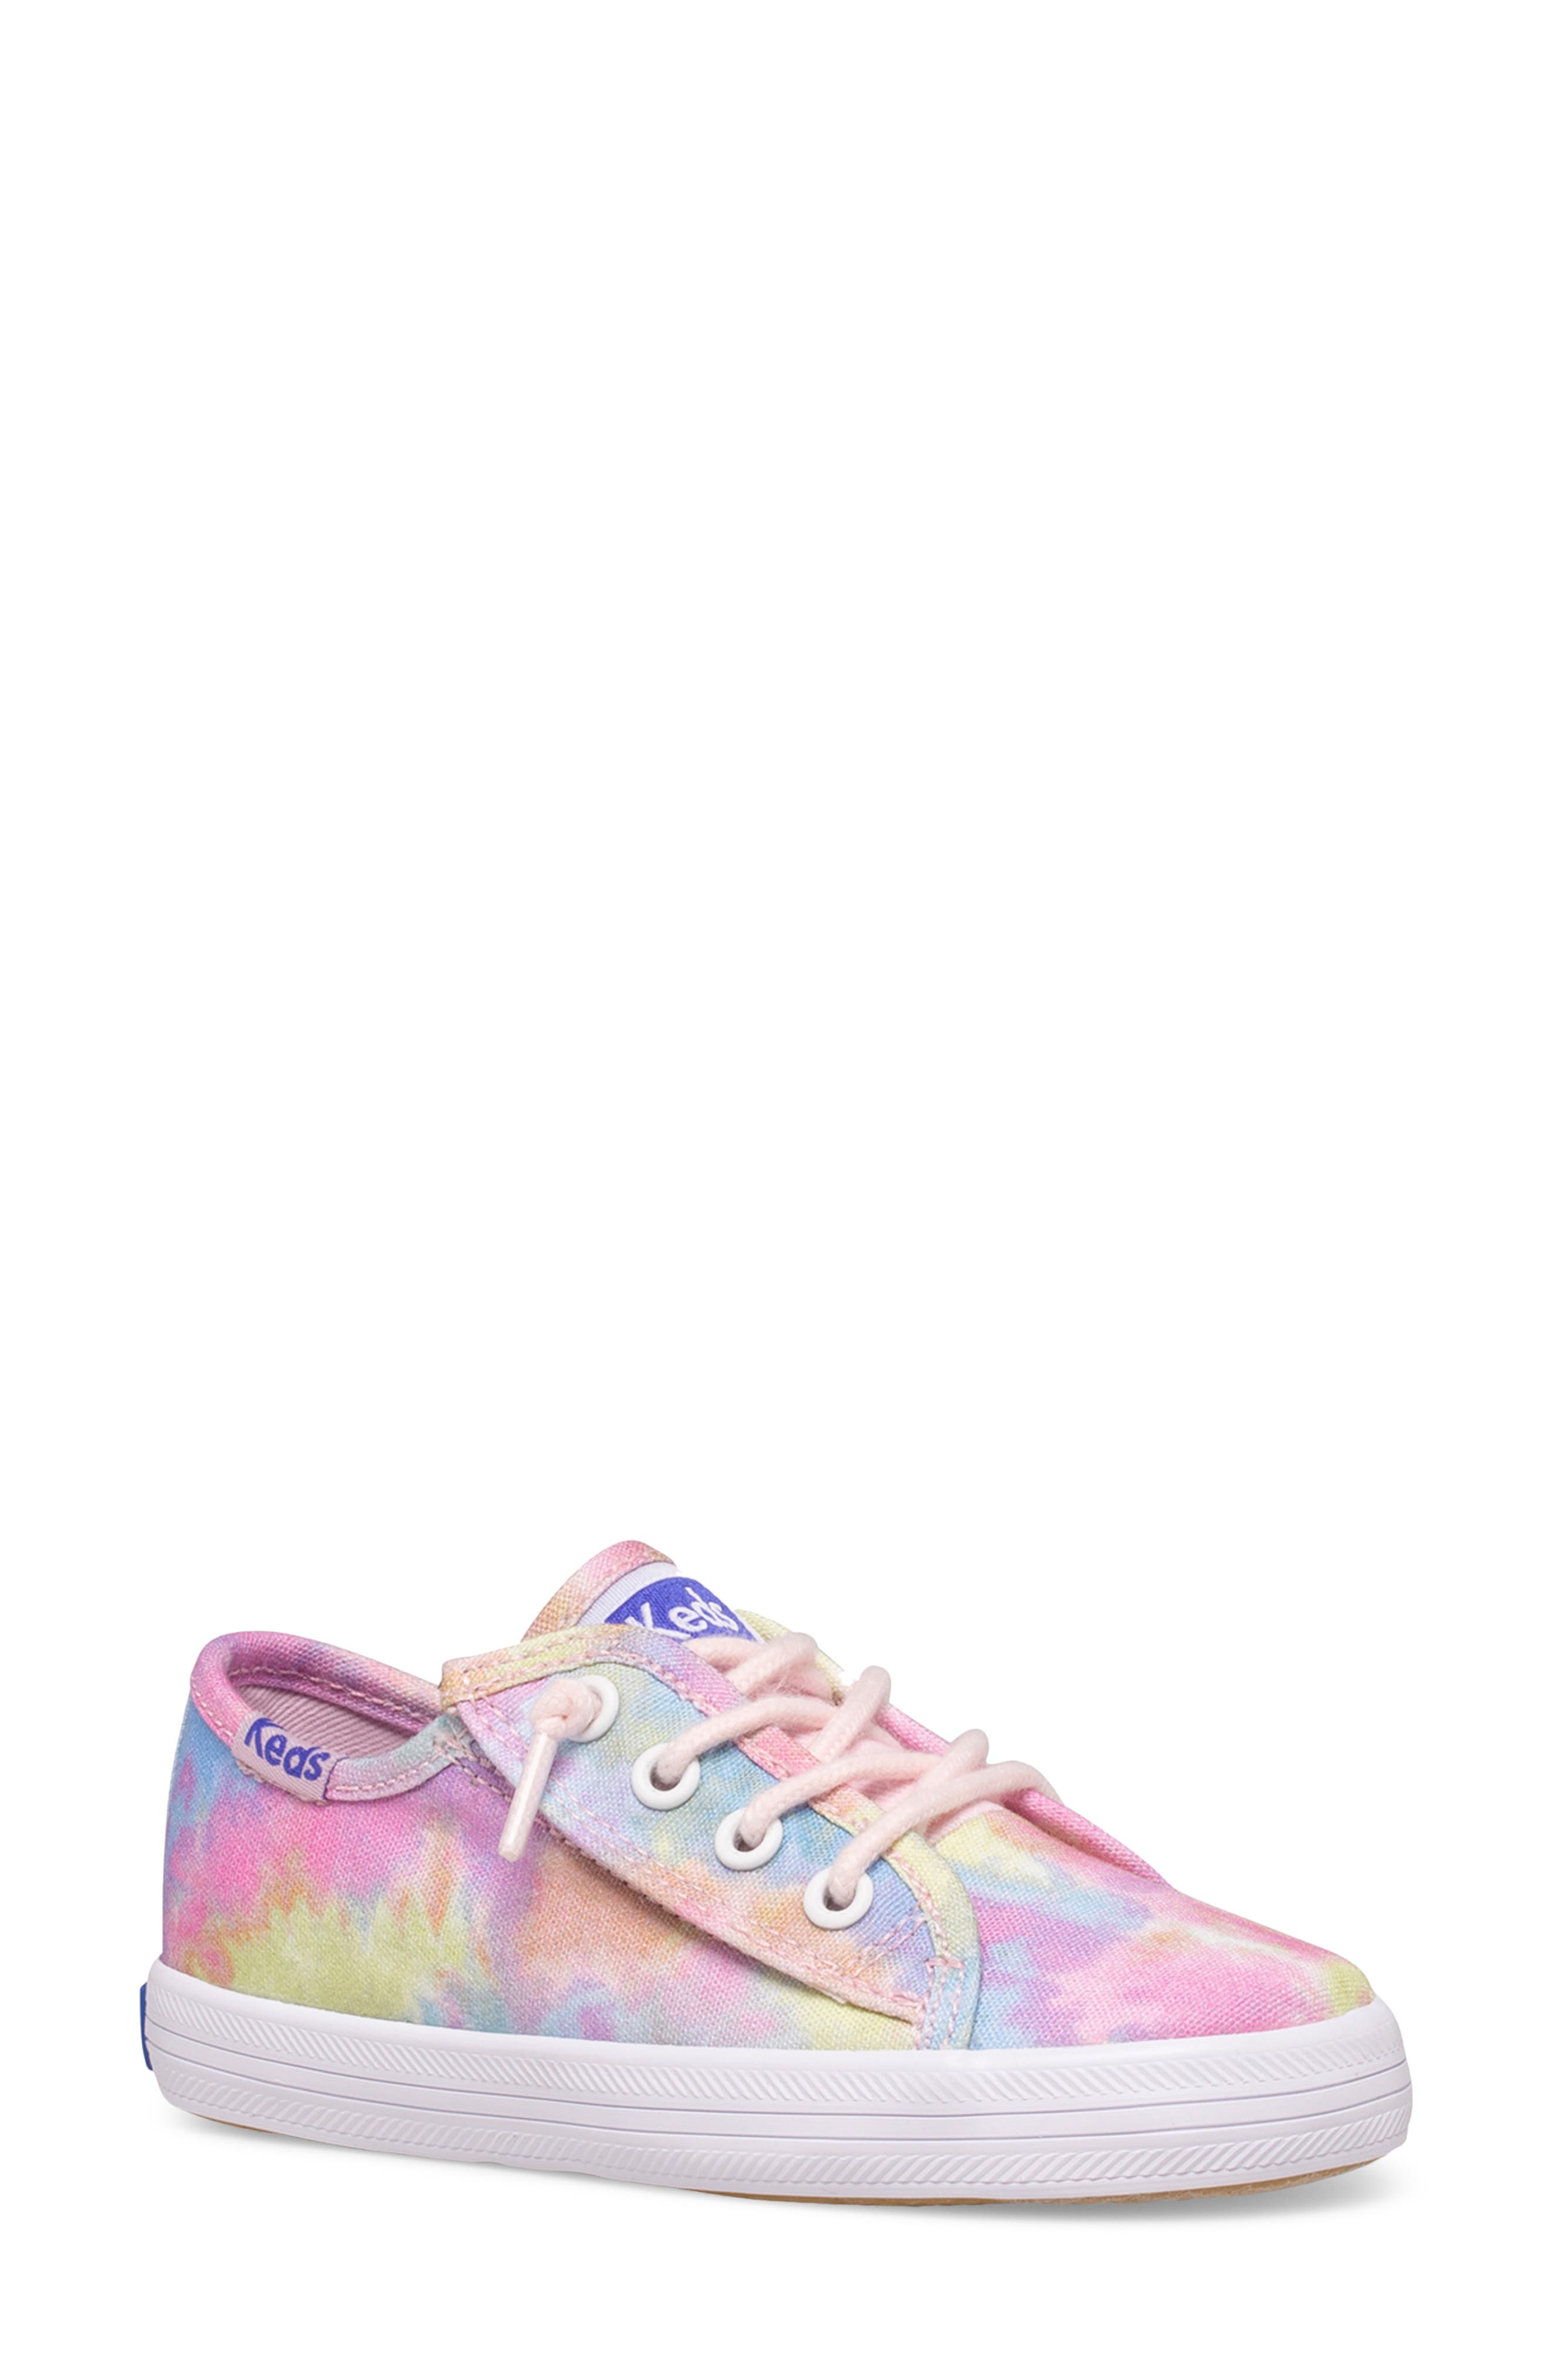 Pink KEDS  WOLVERINE  Double Up Canvas Shoes Kids Eur 31 UK 12.5 Size 13M 